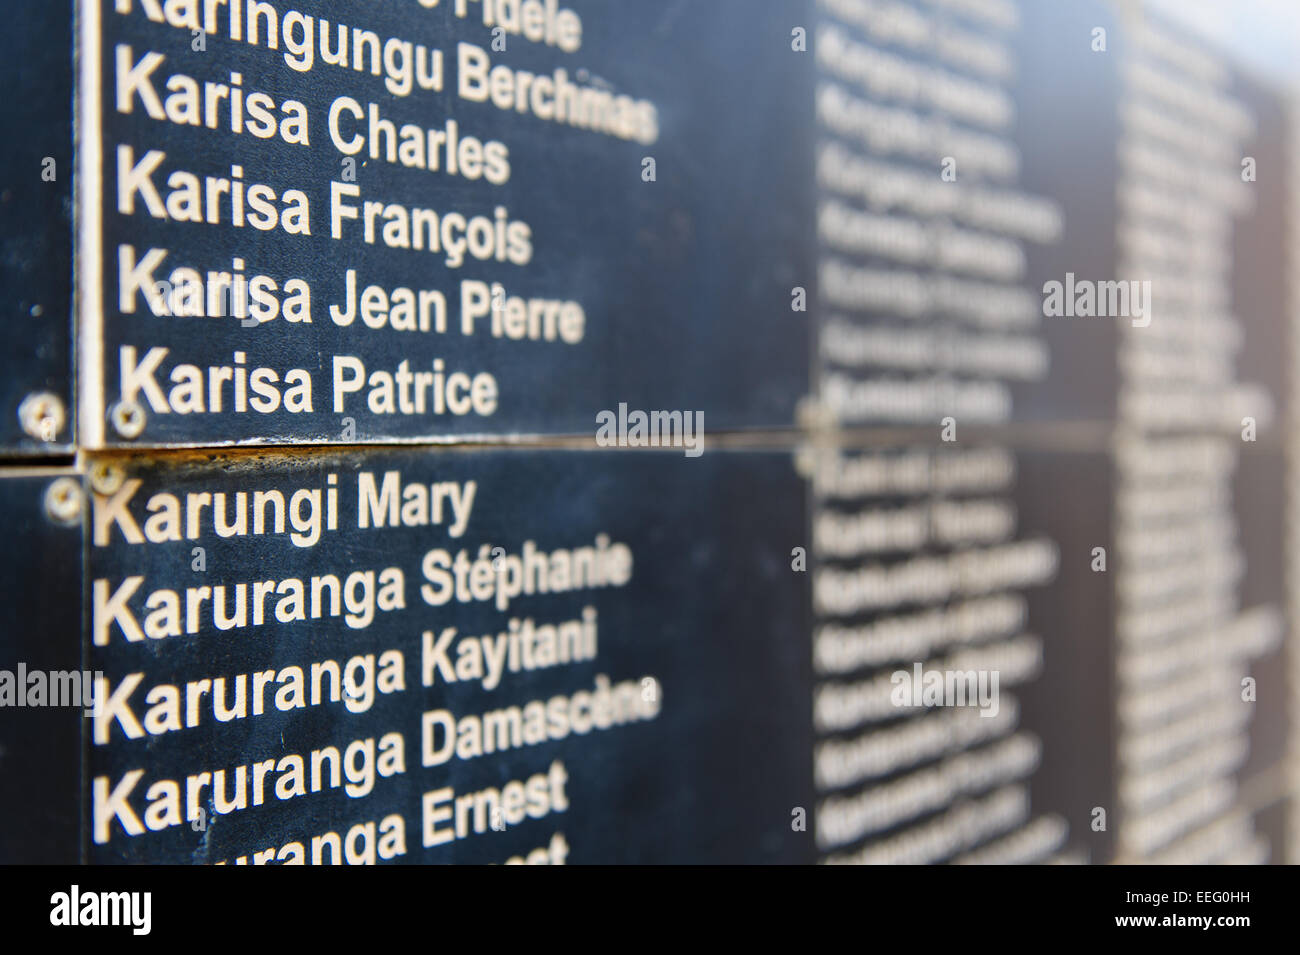 Die Namen der Opfer des Völkermordes in Ruanda 1994. Kigali Genozid Gedenkstätte. Kigali, Ruanda. Stockfoto